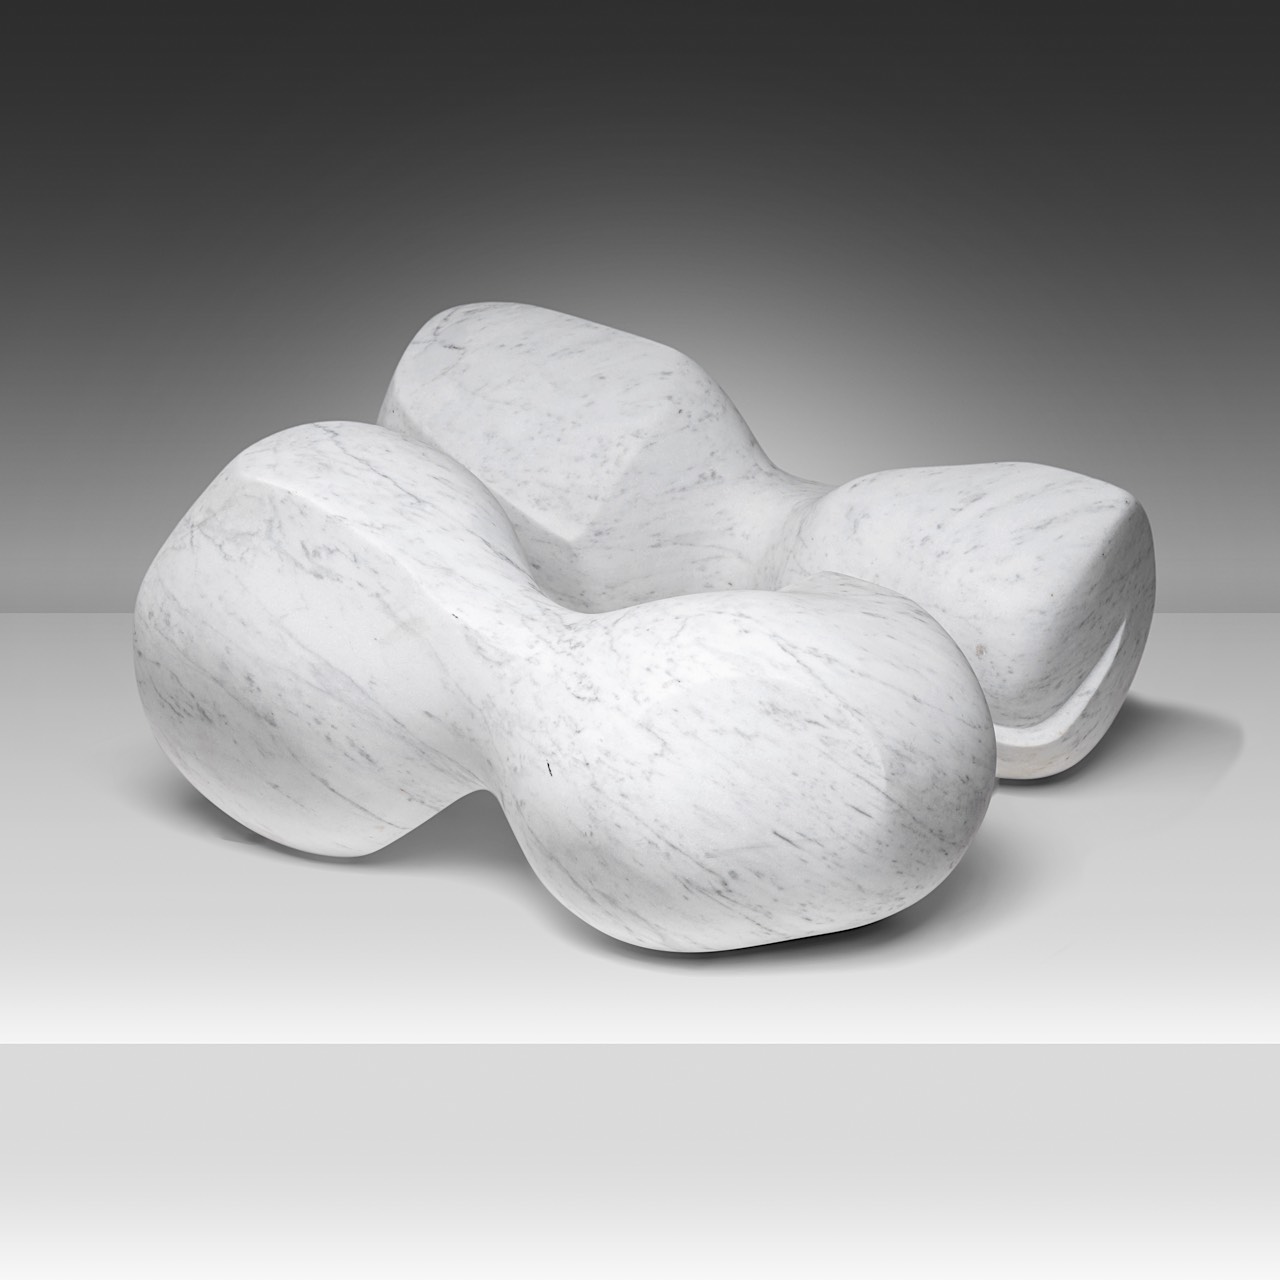 Pol Spilliaert (1935-2023), 'Embryo, geboorte', Carrara marble, 42 x 22 x 20 cm. (16.5 x 8.6 x 7.8 i